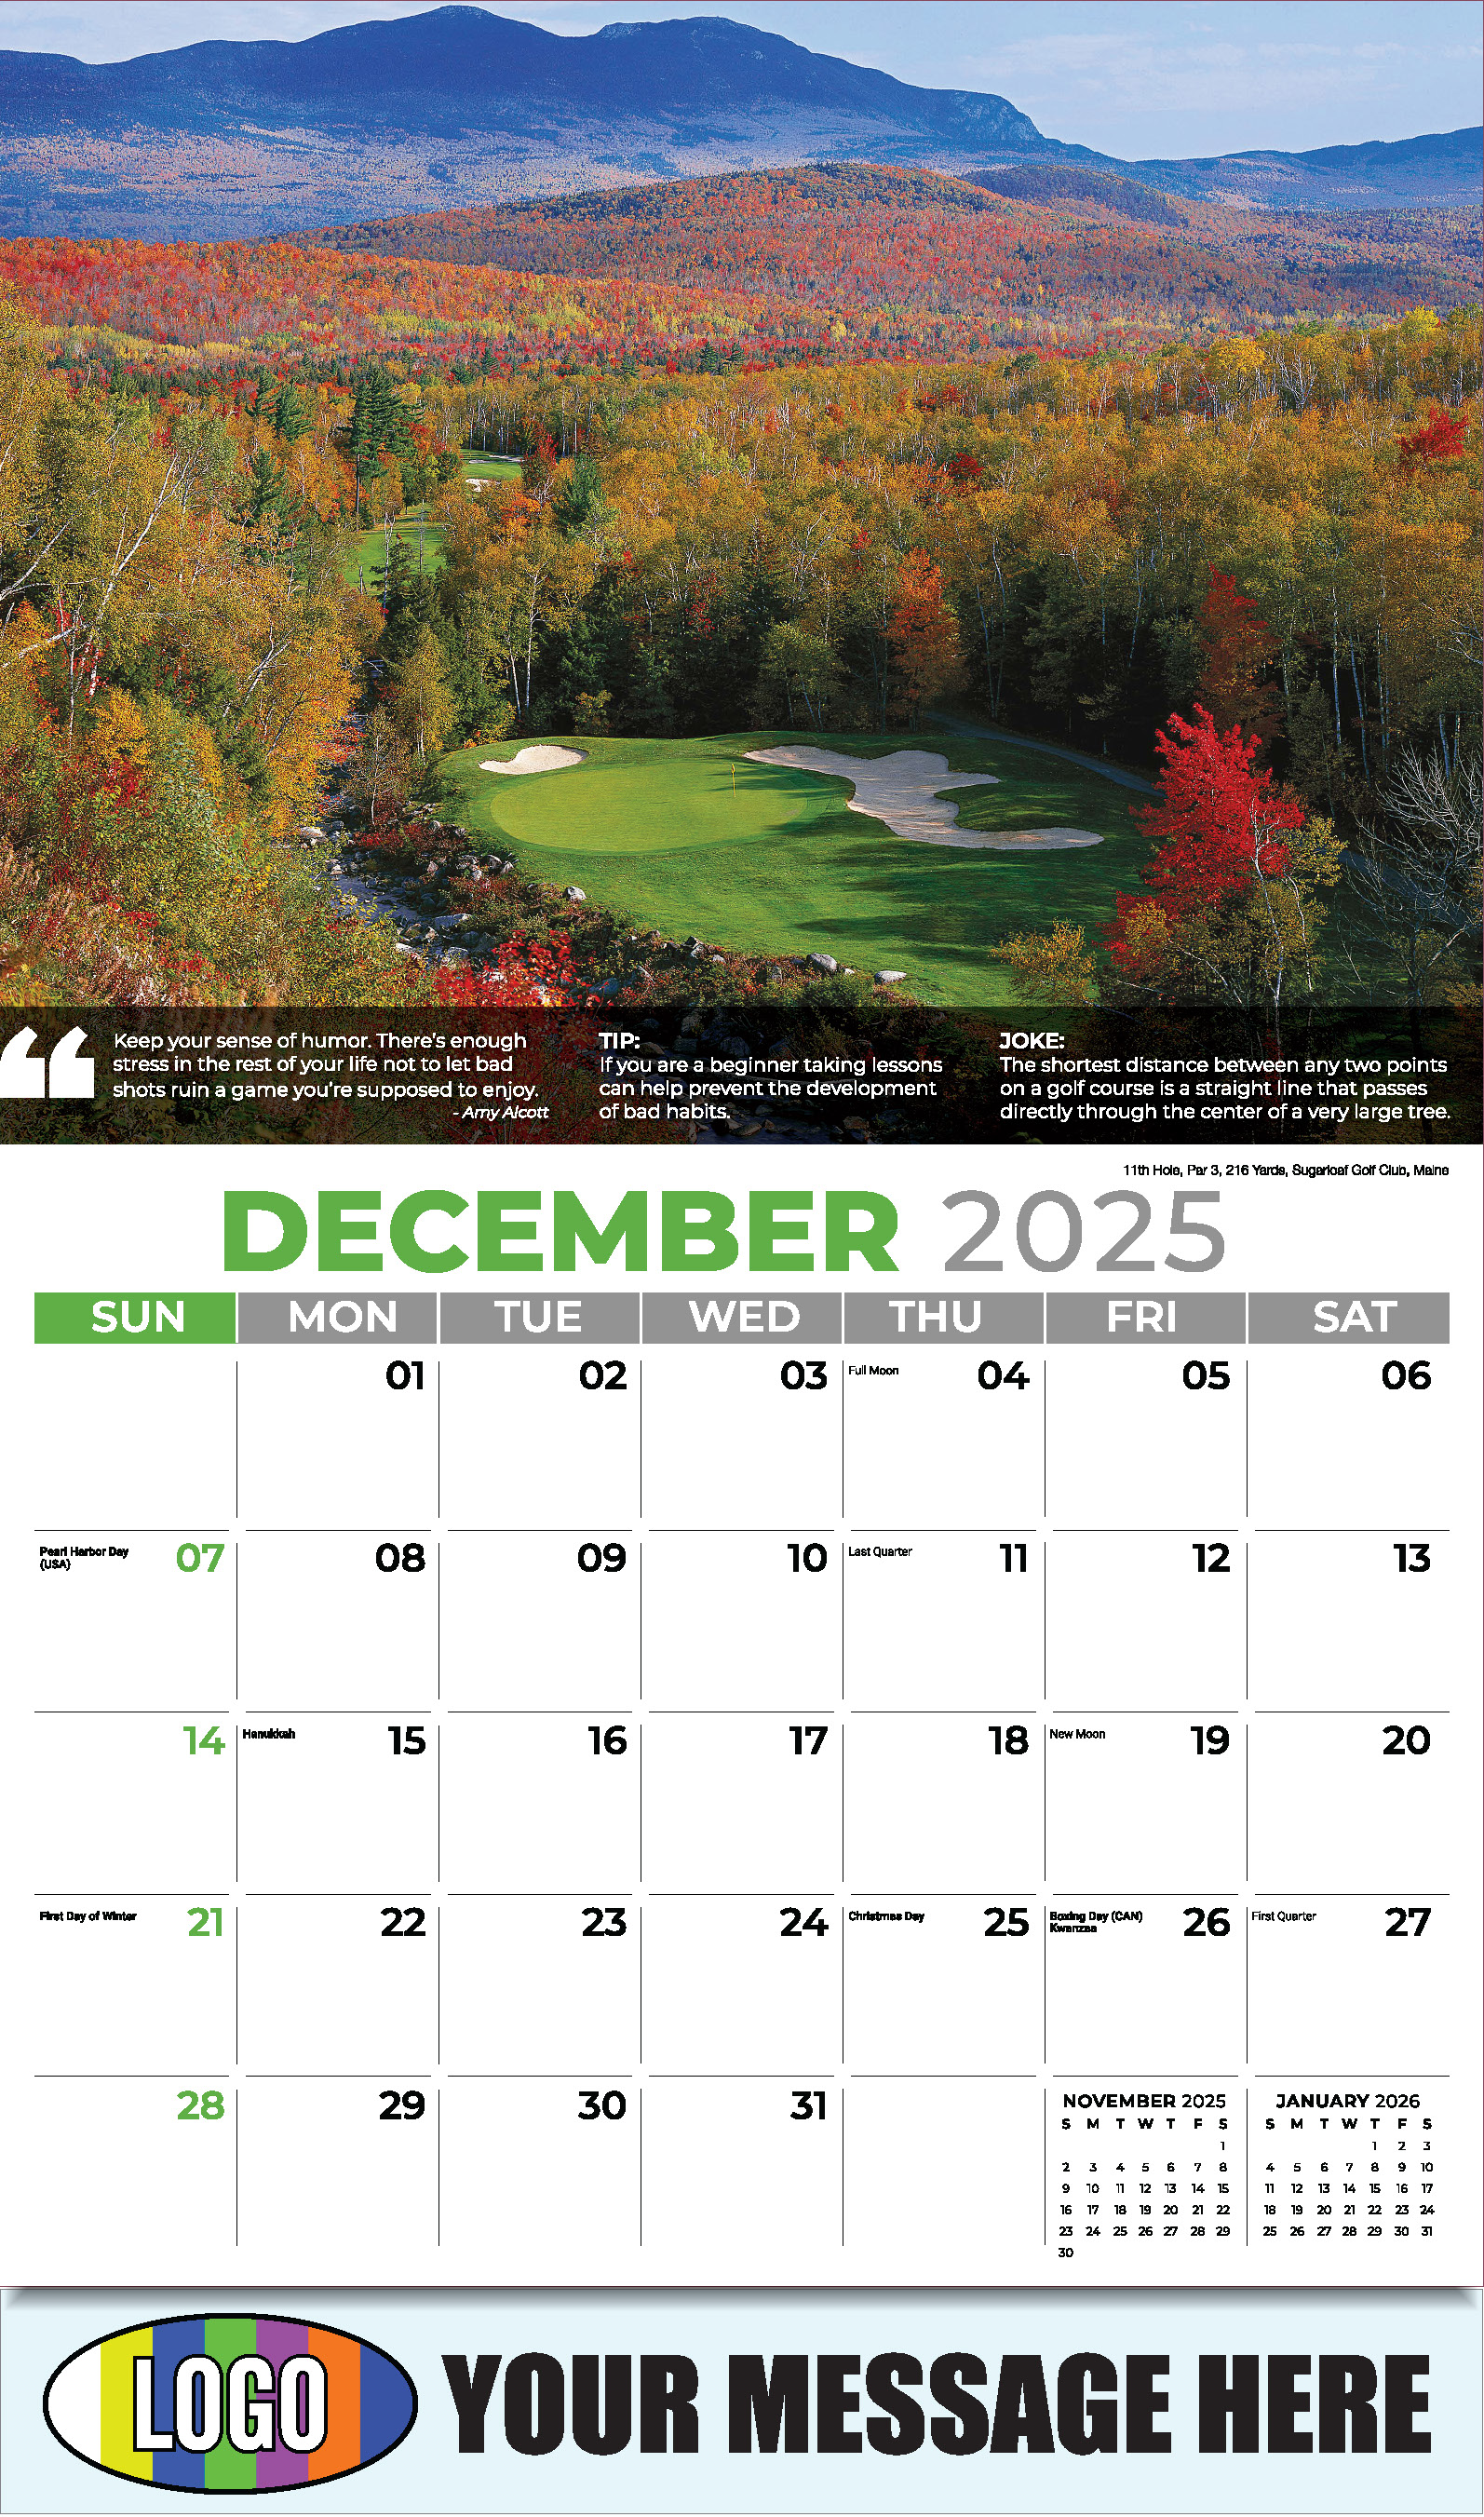 Golf Tips 2025 Business Promo Calendar - December